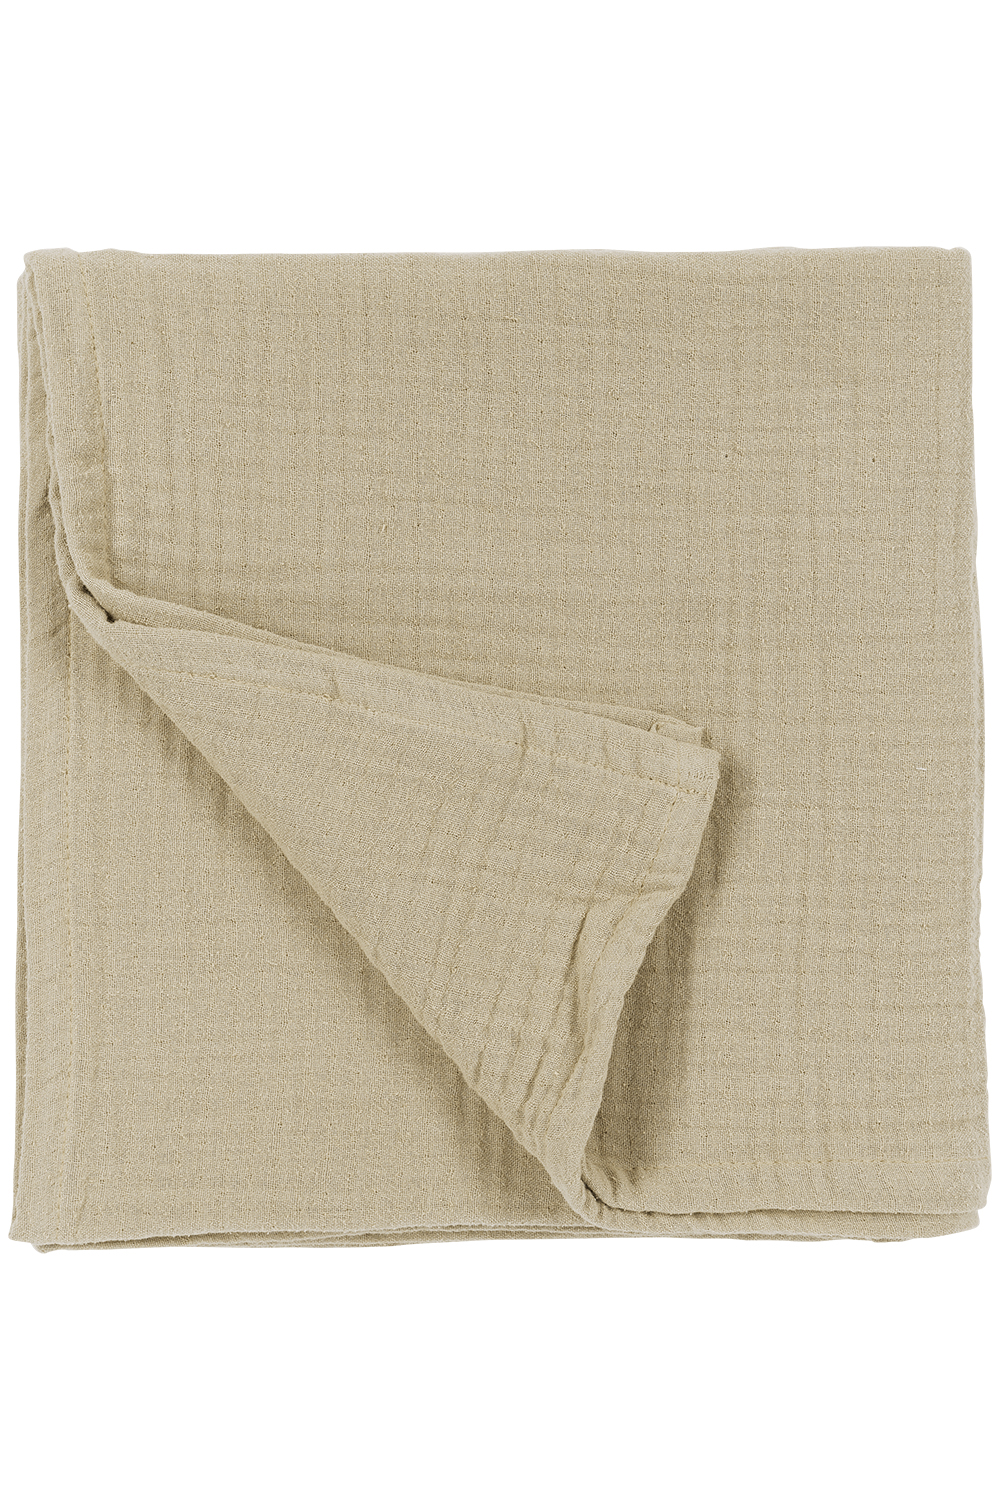 Blanket muslin Uni - sand - 140x200cm